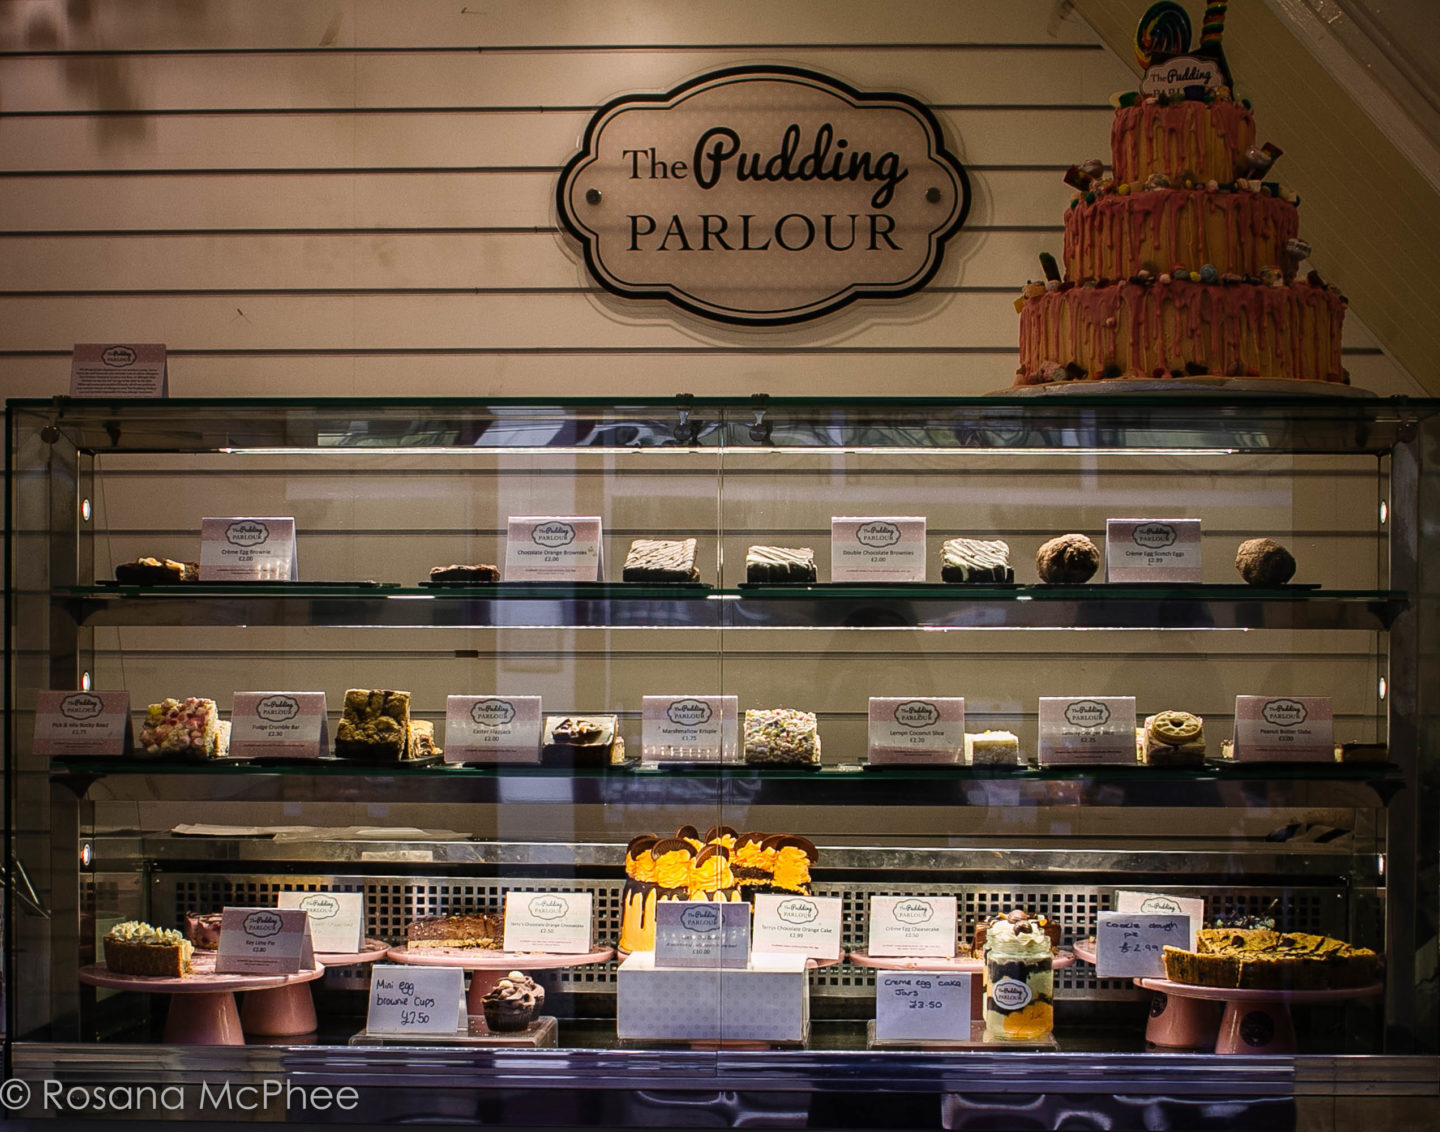 The Pudding Parlour in Grainger Market